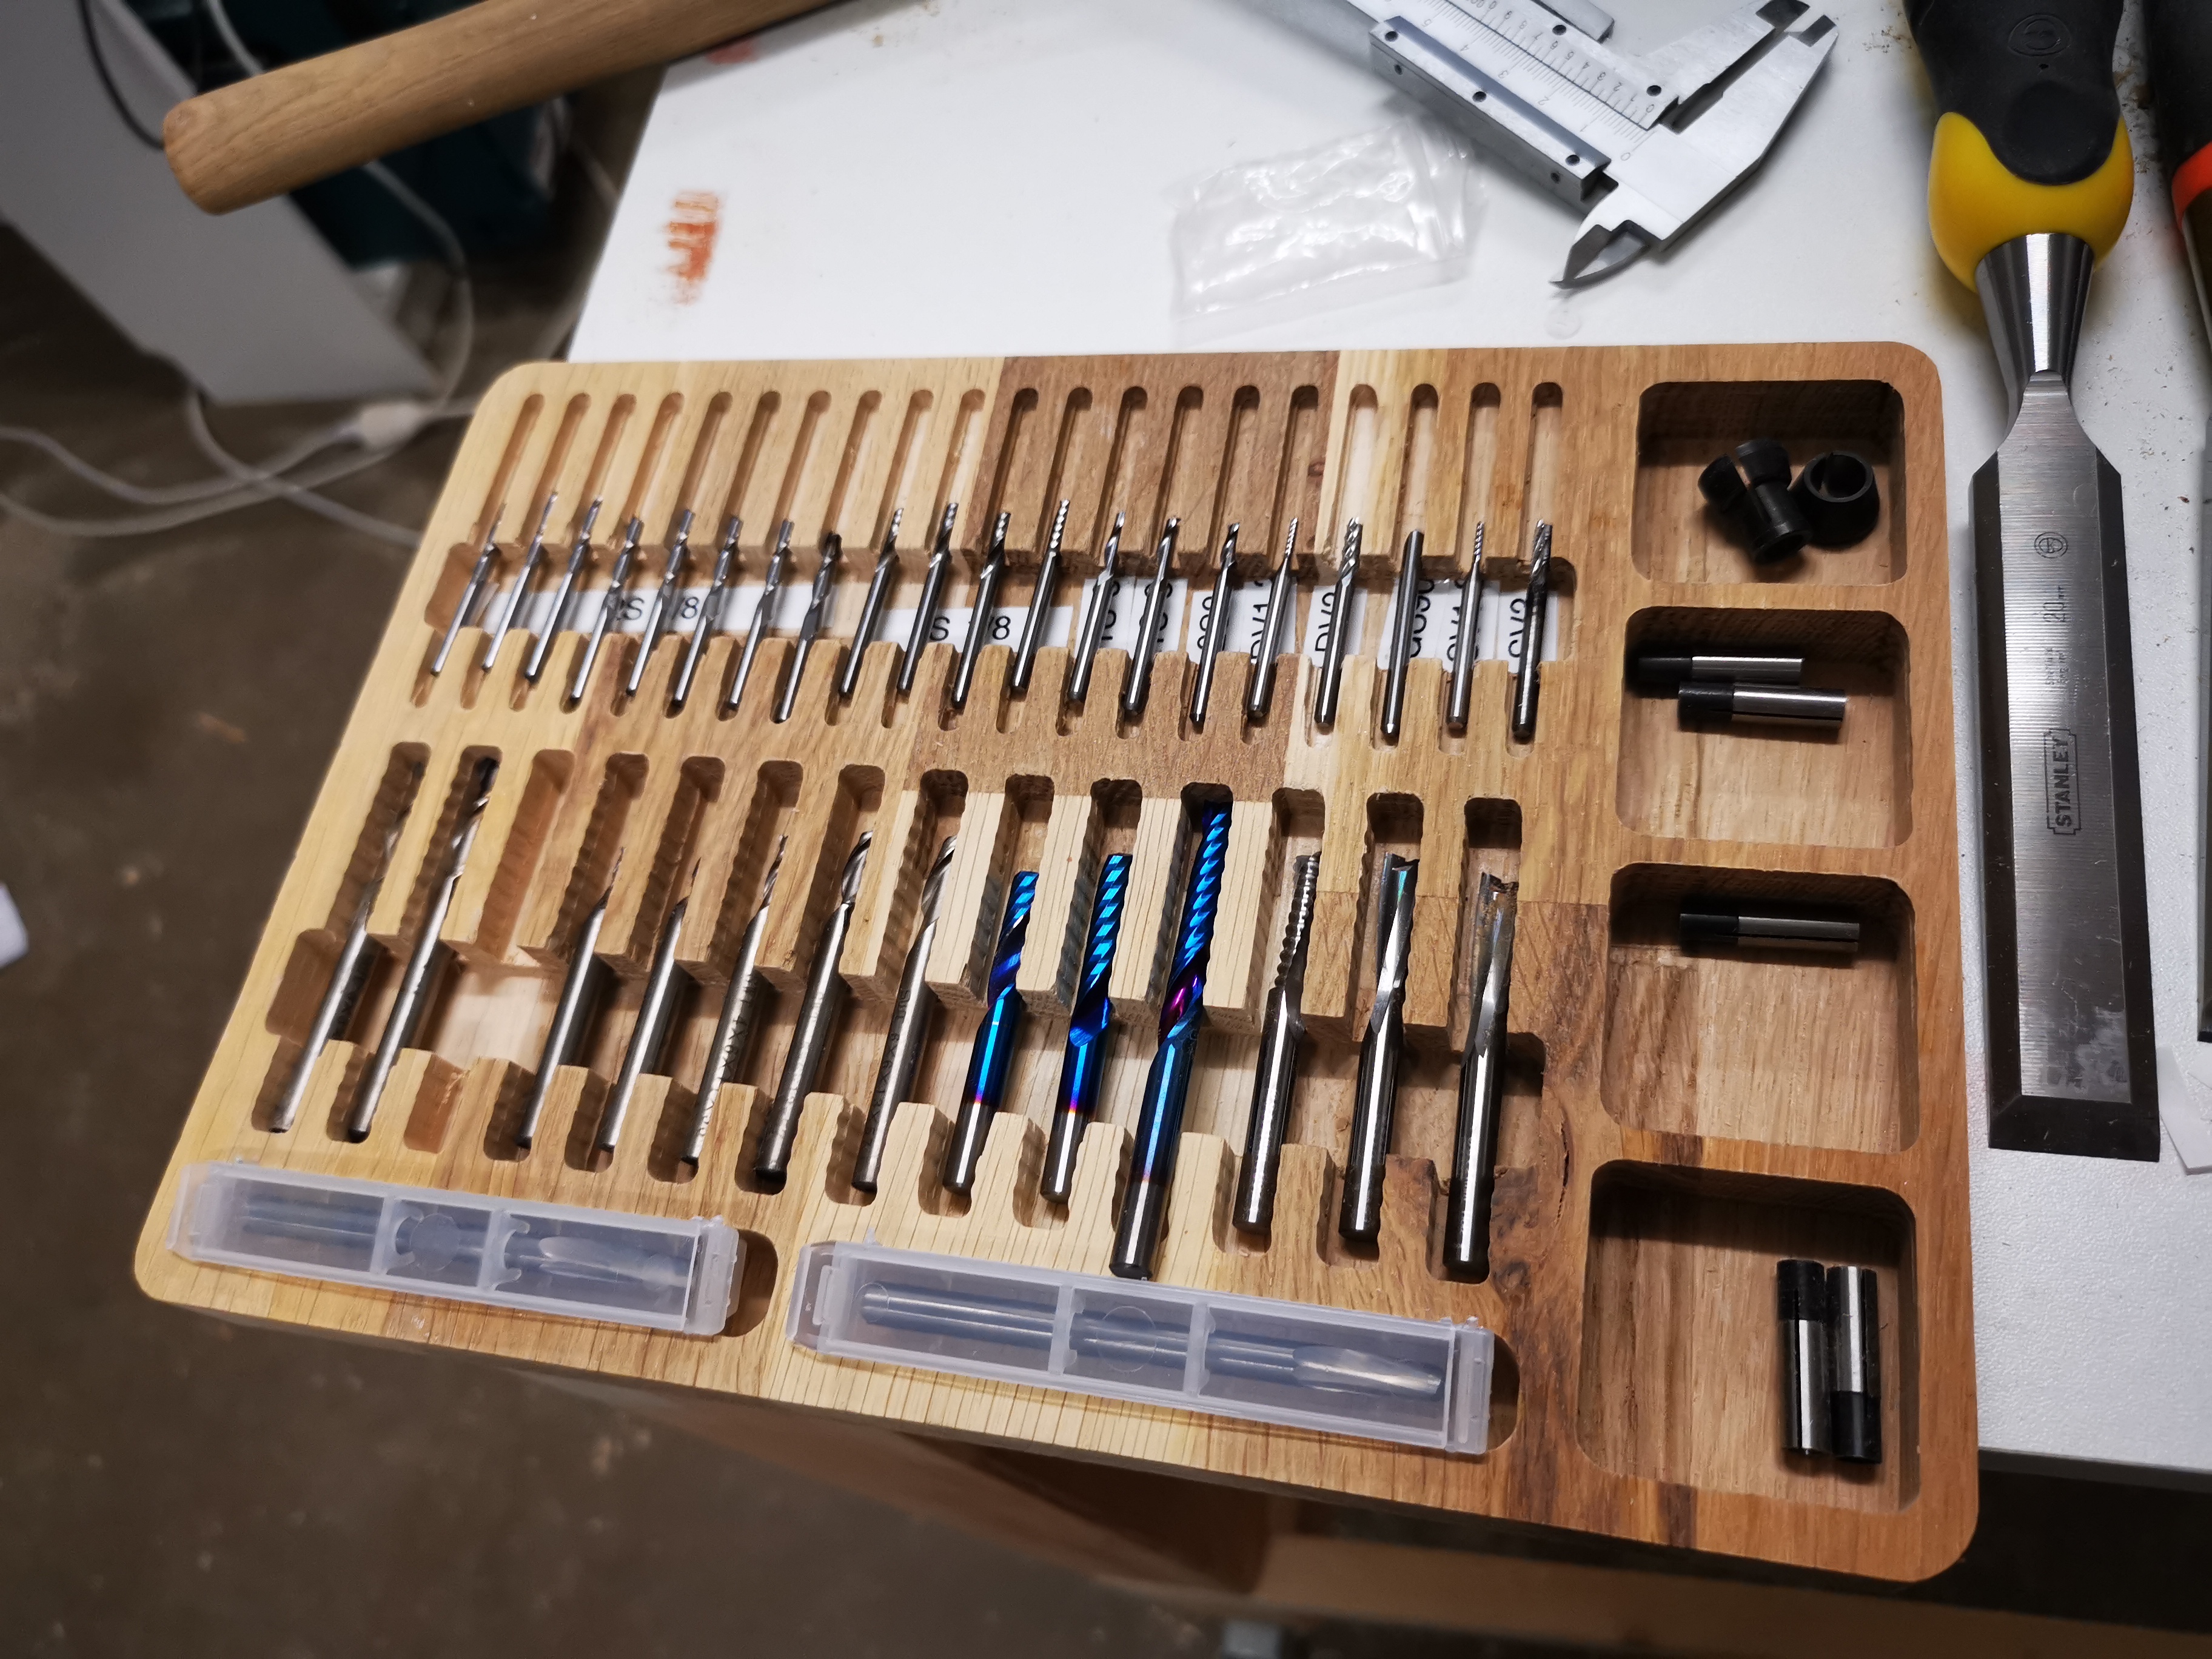 CNC tool tray